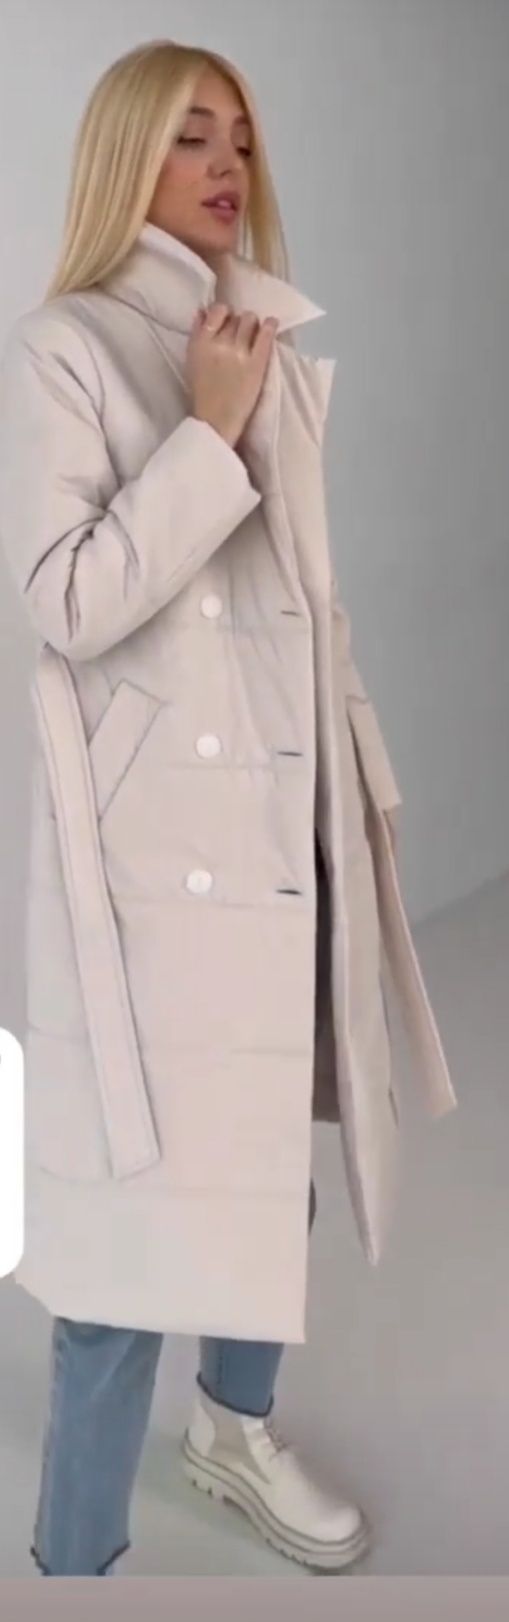 Жіноче пальто (демі)